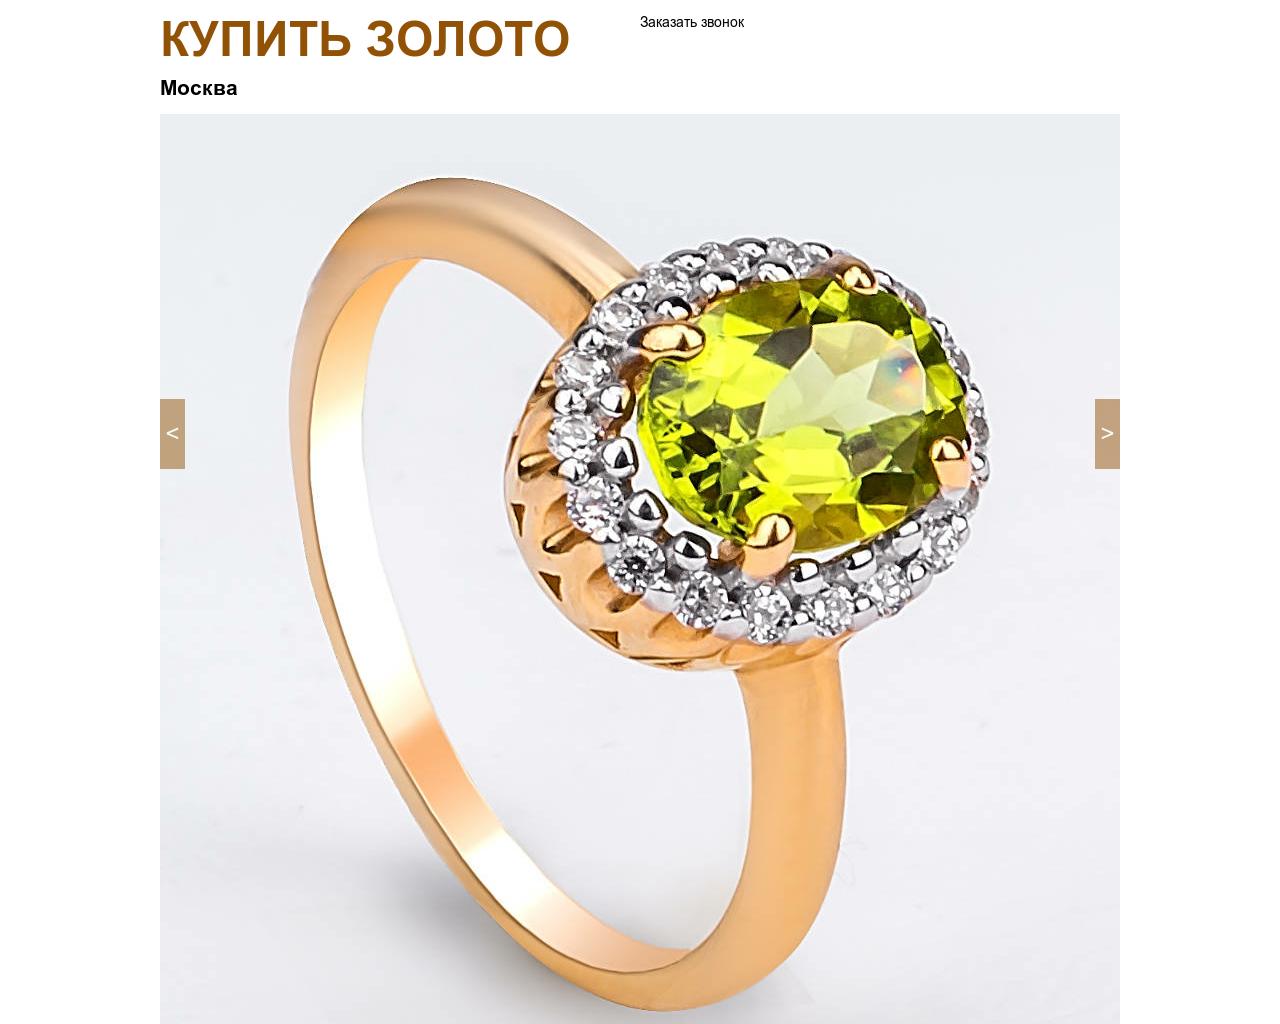 Изображение сайта kupit-zoloto.ru в разрешении 1280x1024